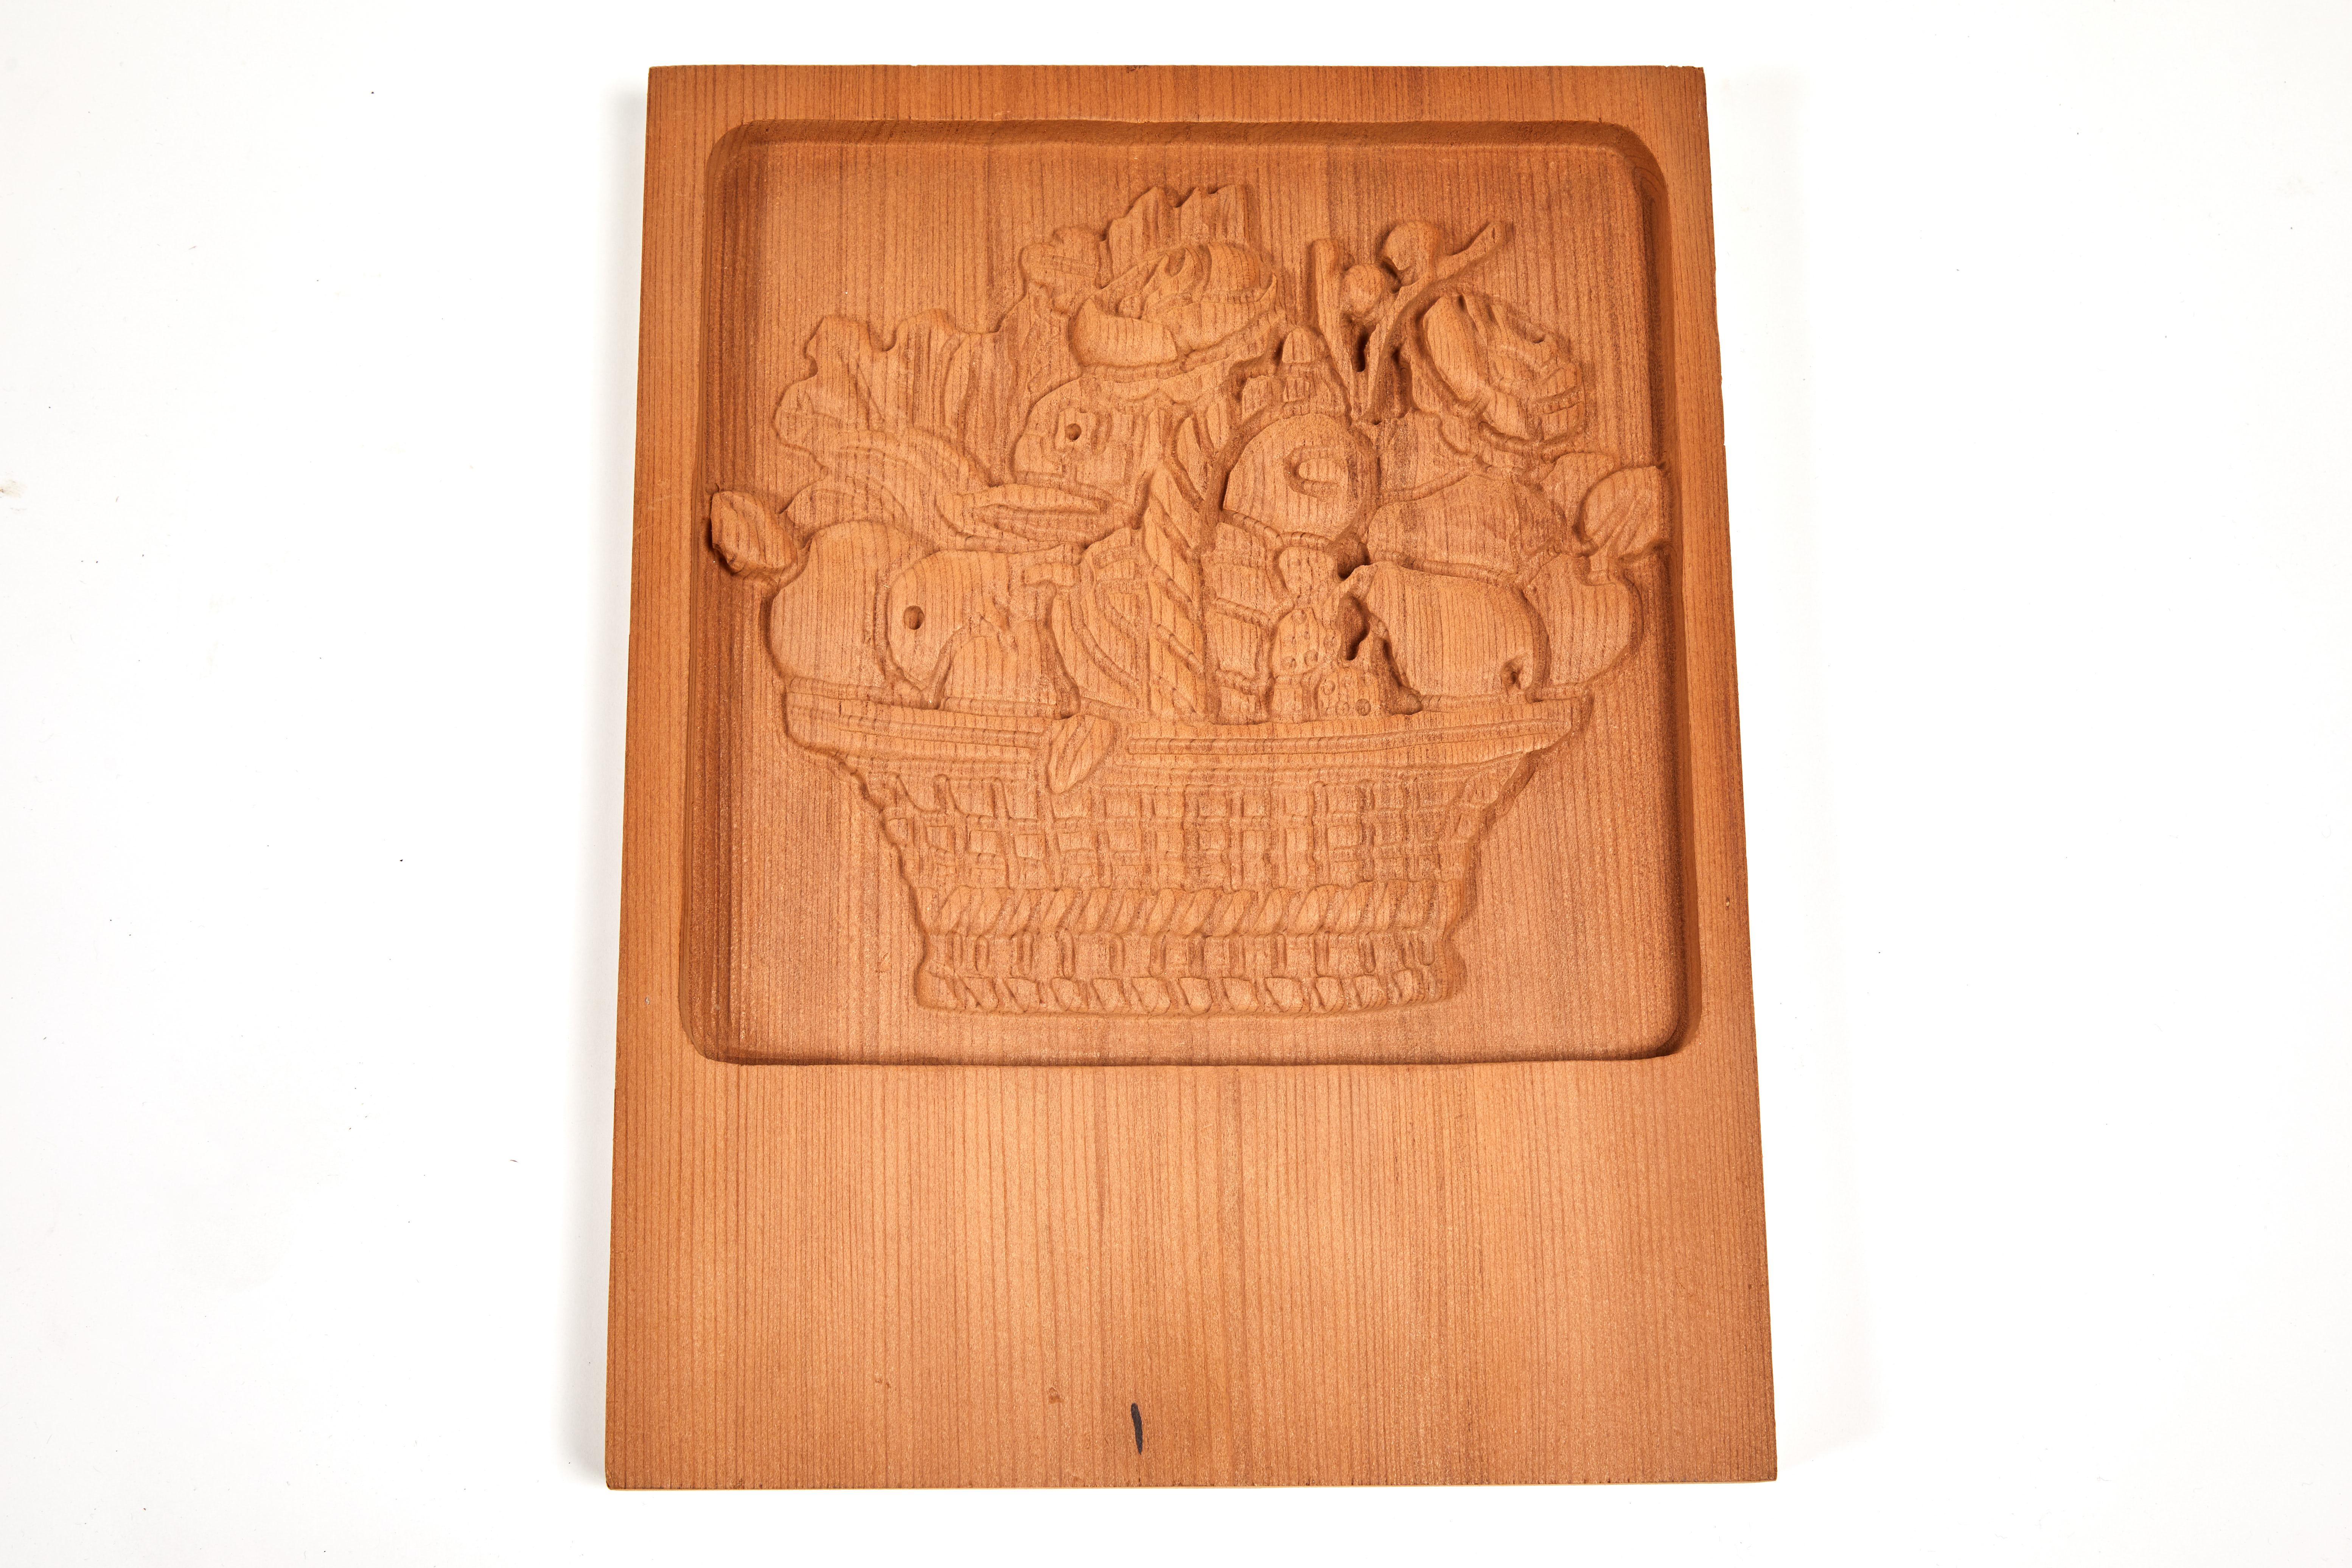 evelyn ackerman wood carving